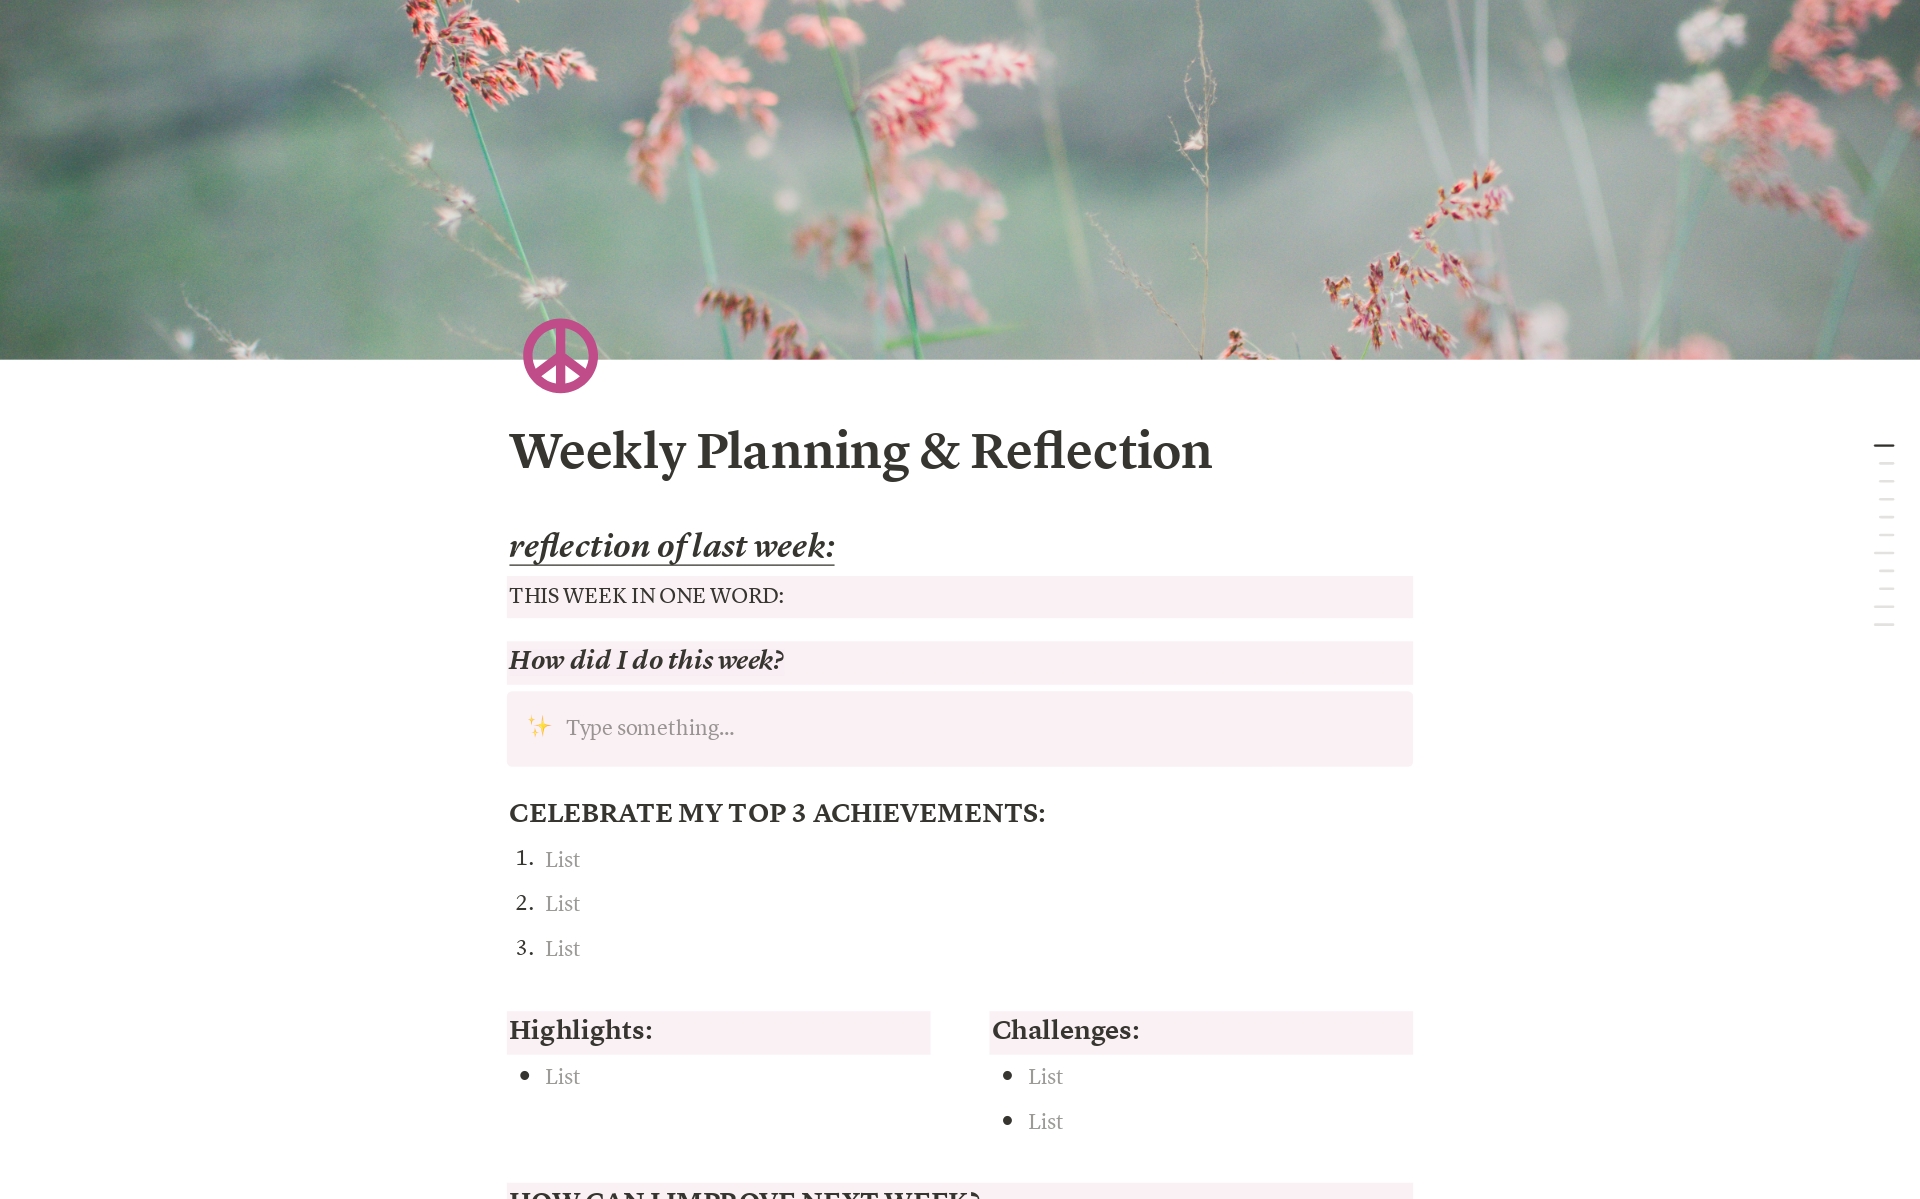 Weekly Planning & Reflection님의 템플릿 미리보기